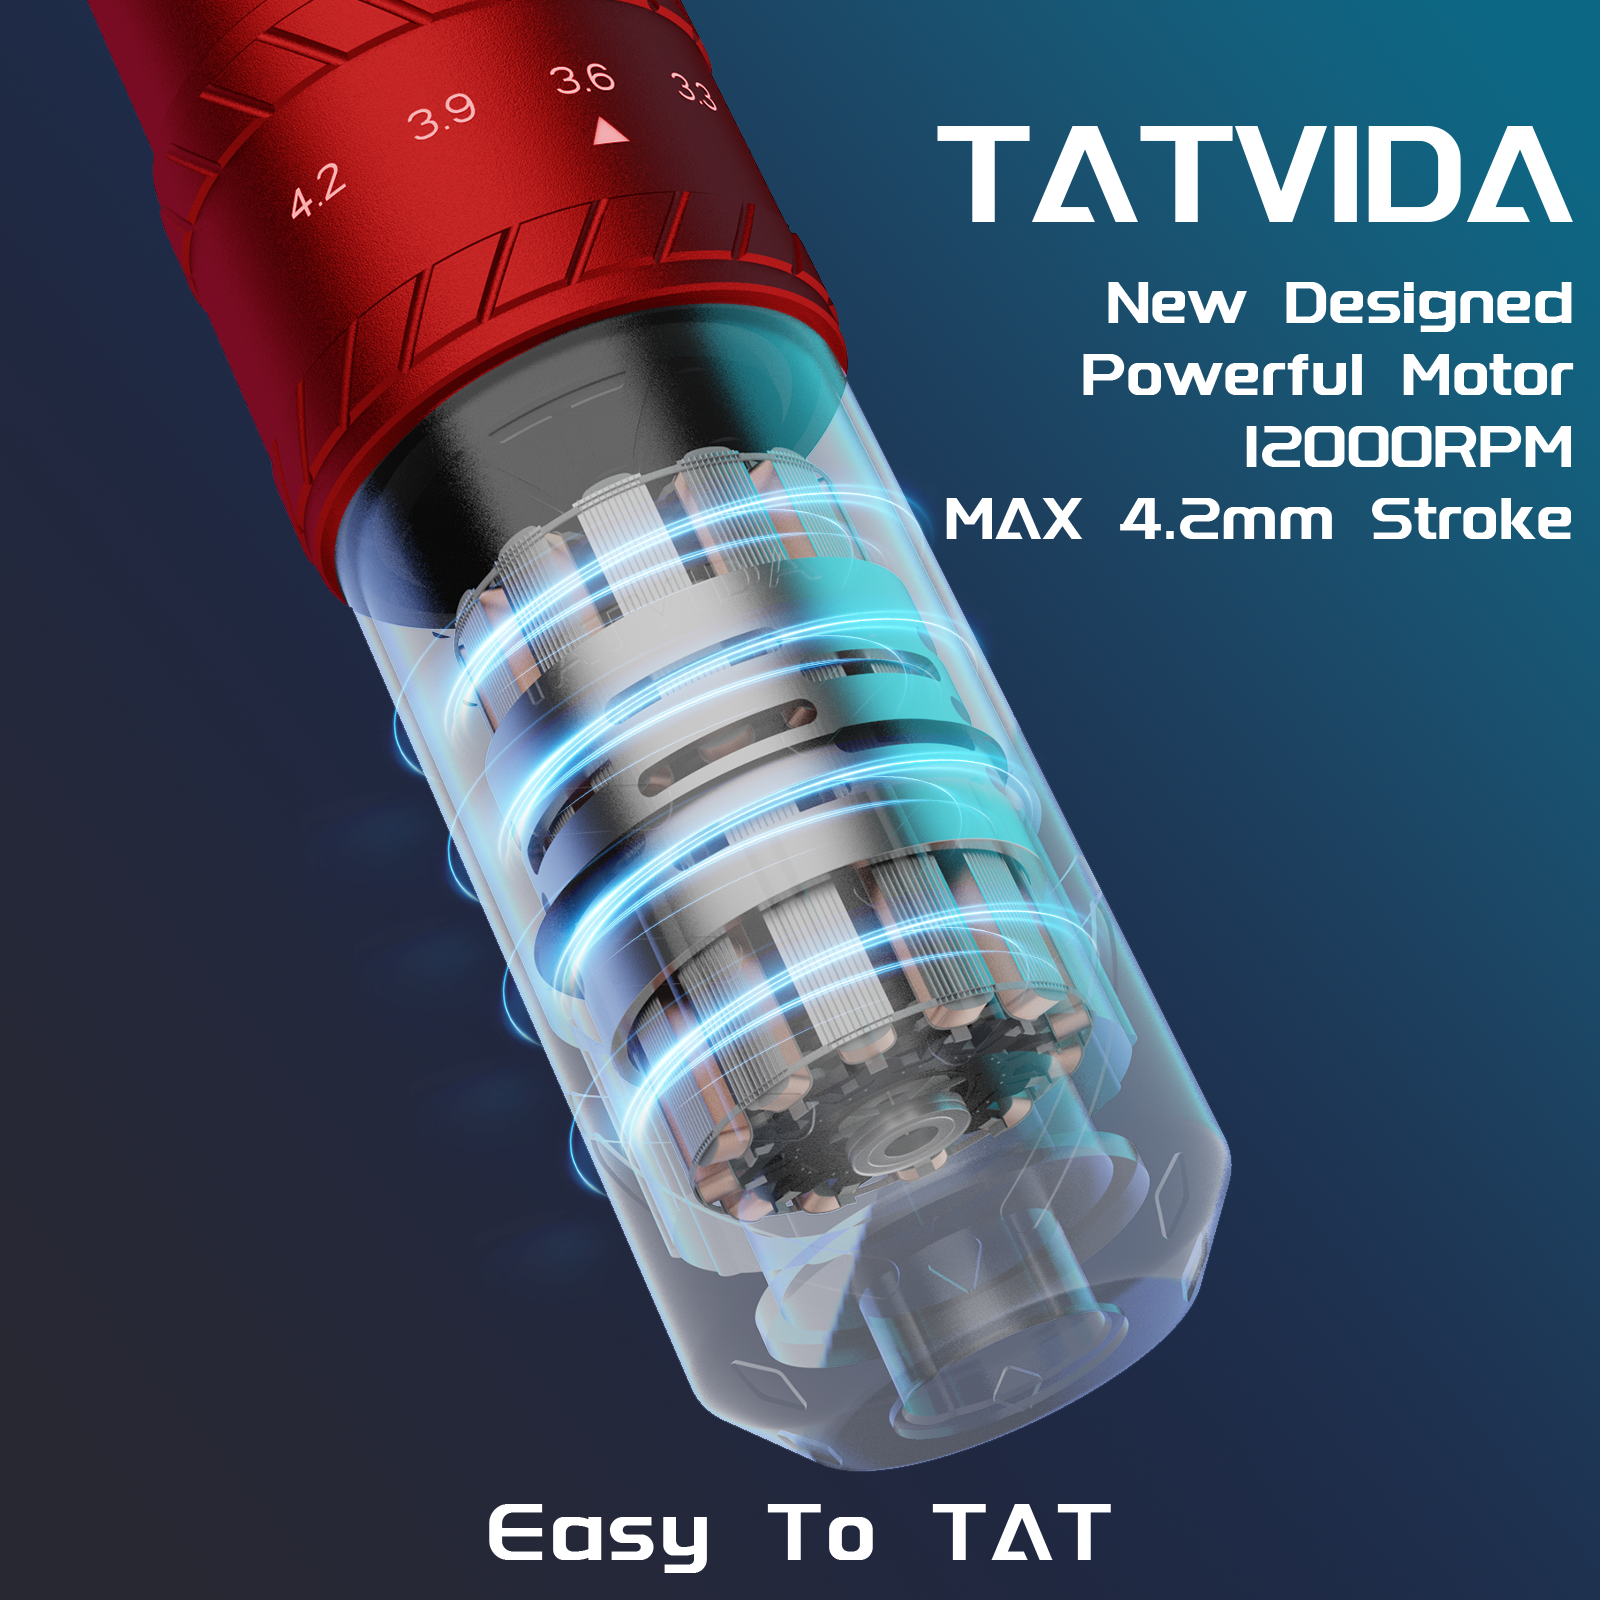 TATVIDA Wireless Tattoo Machine with New Designed Powerful Motor